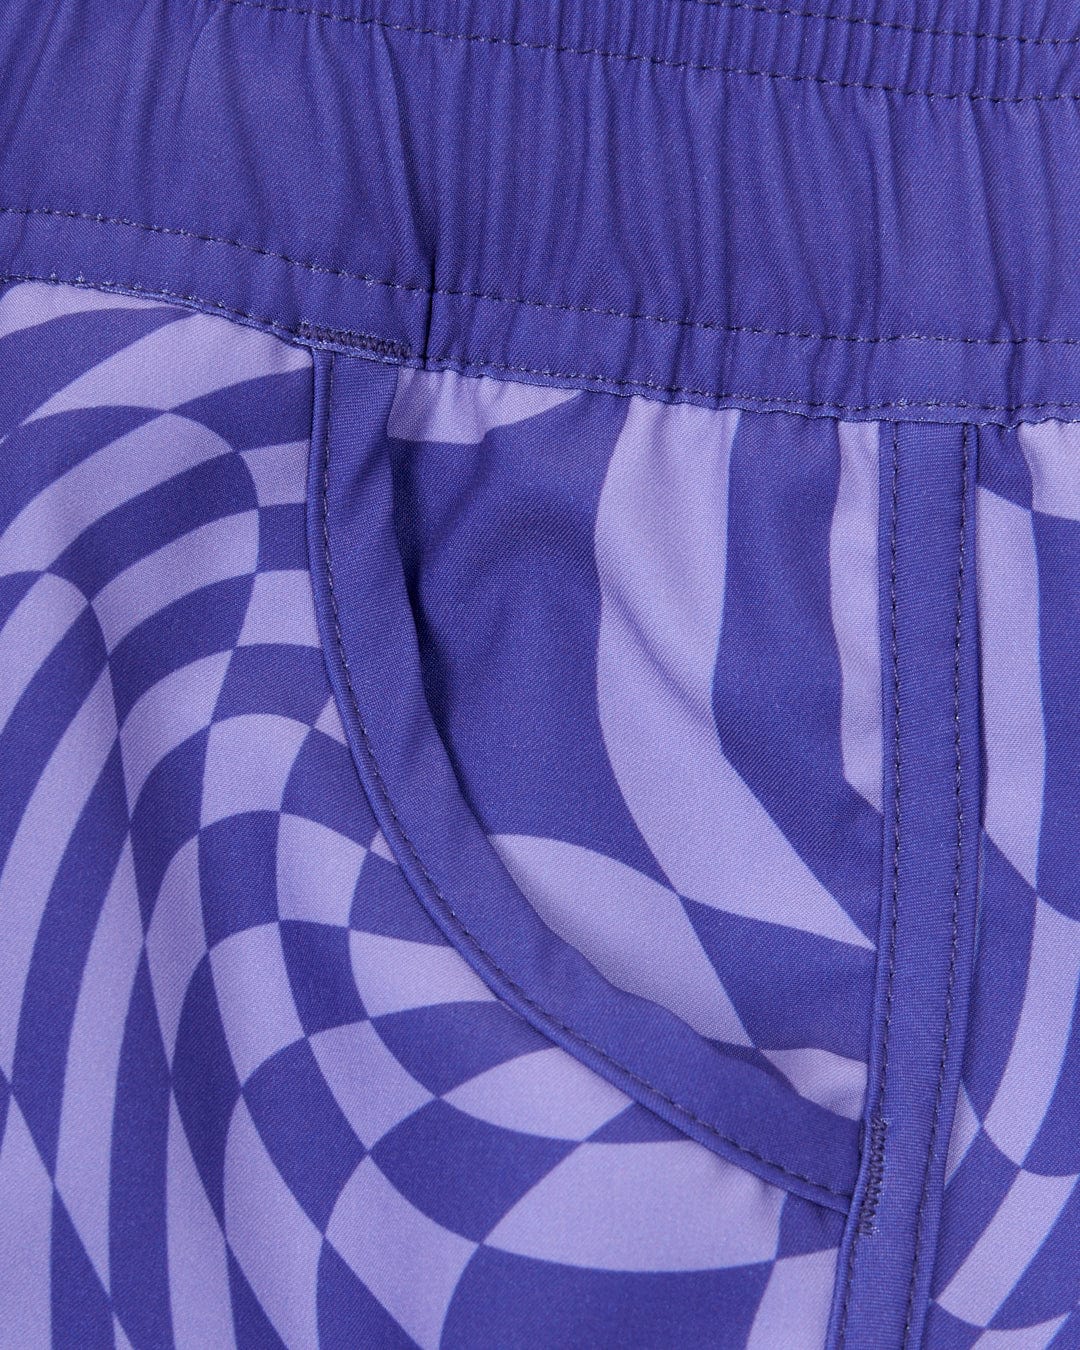 A purple and white Saltrock Rezz - Kids Boardshorts with a swirl pattern.